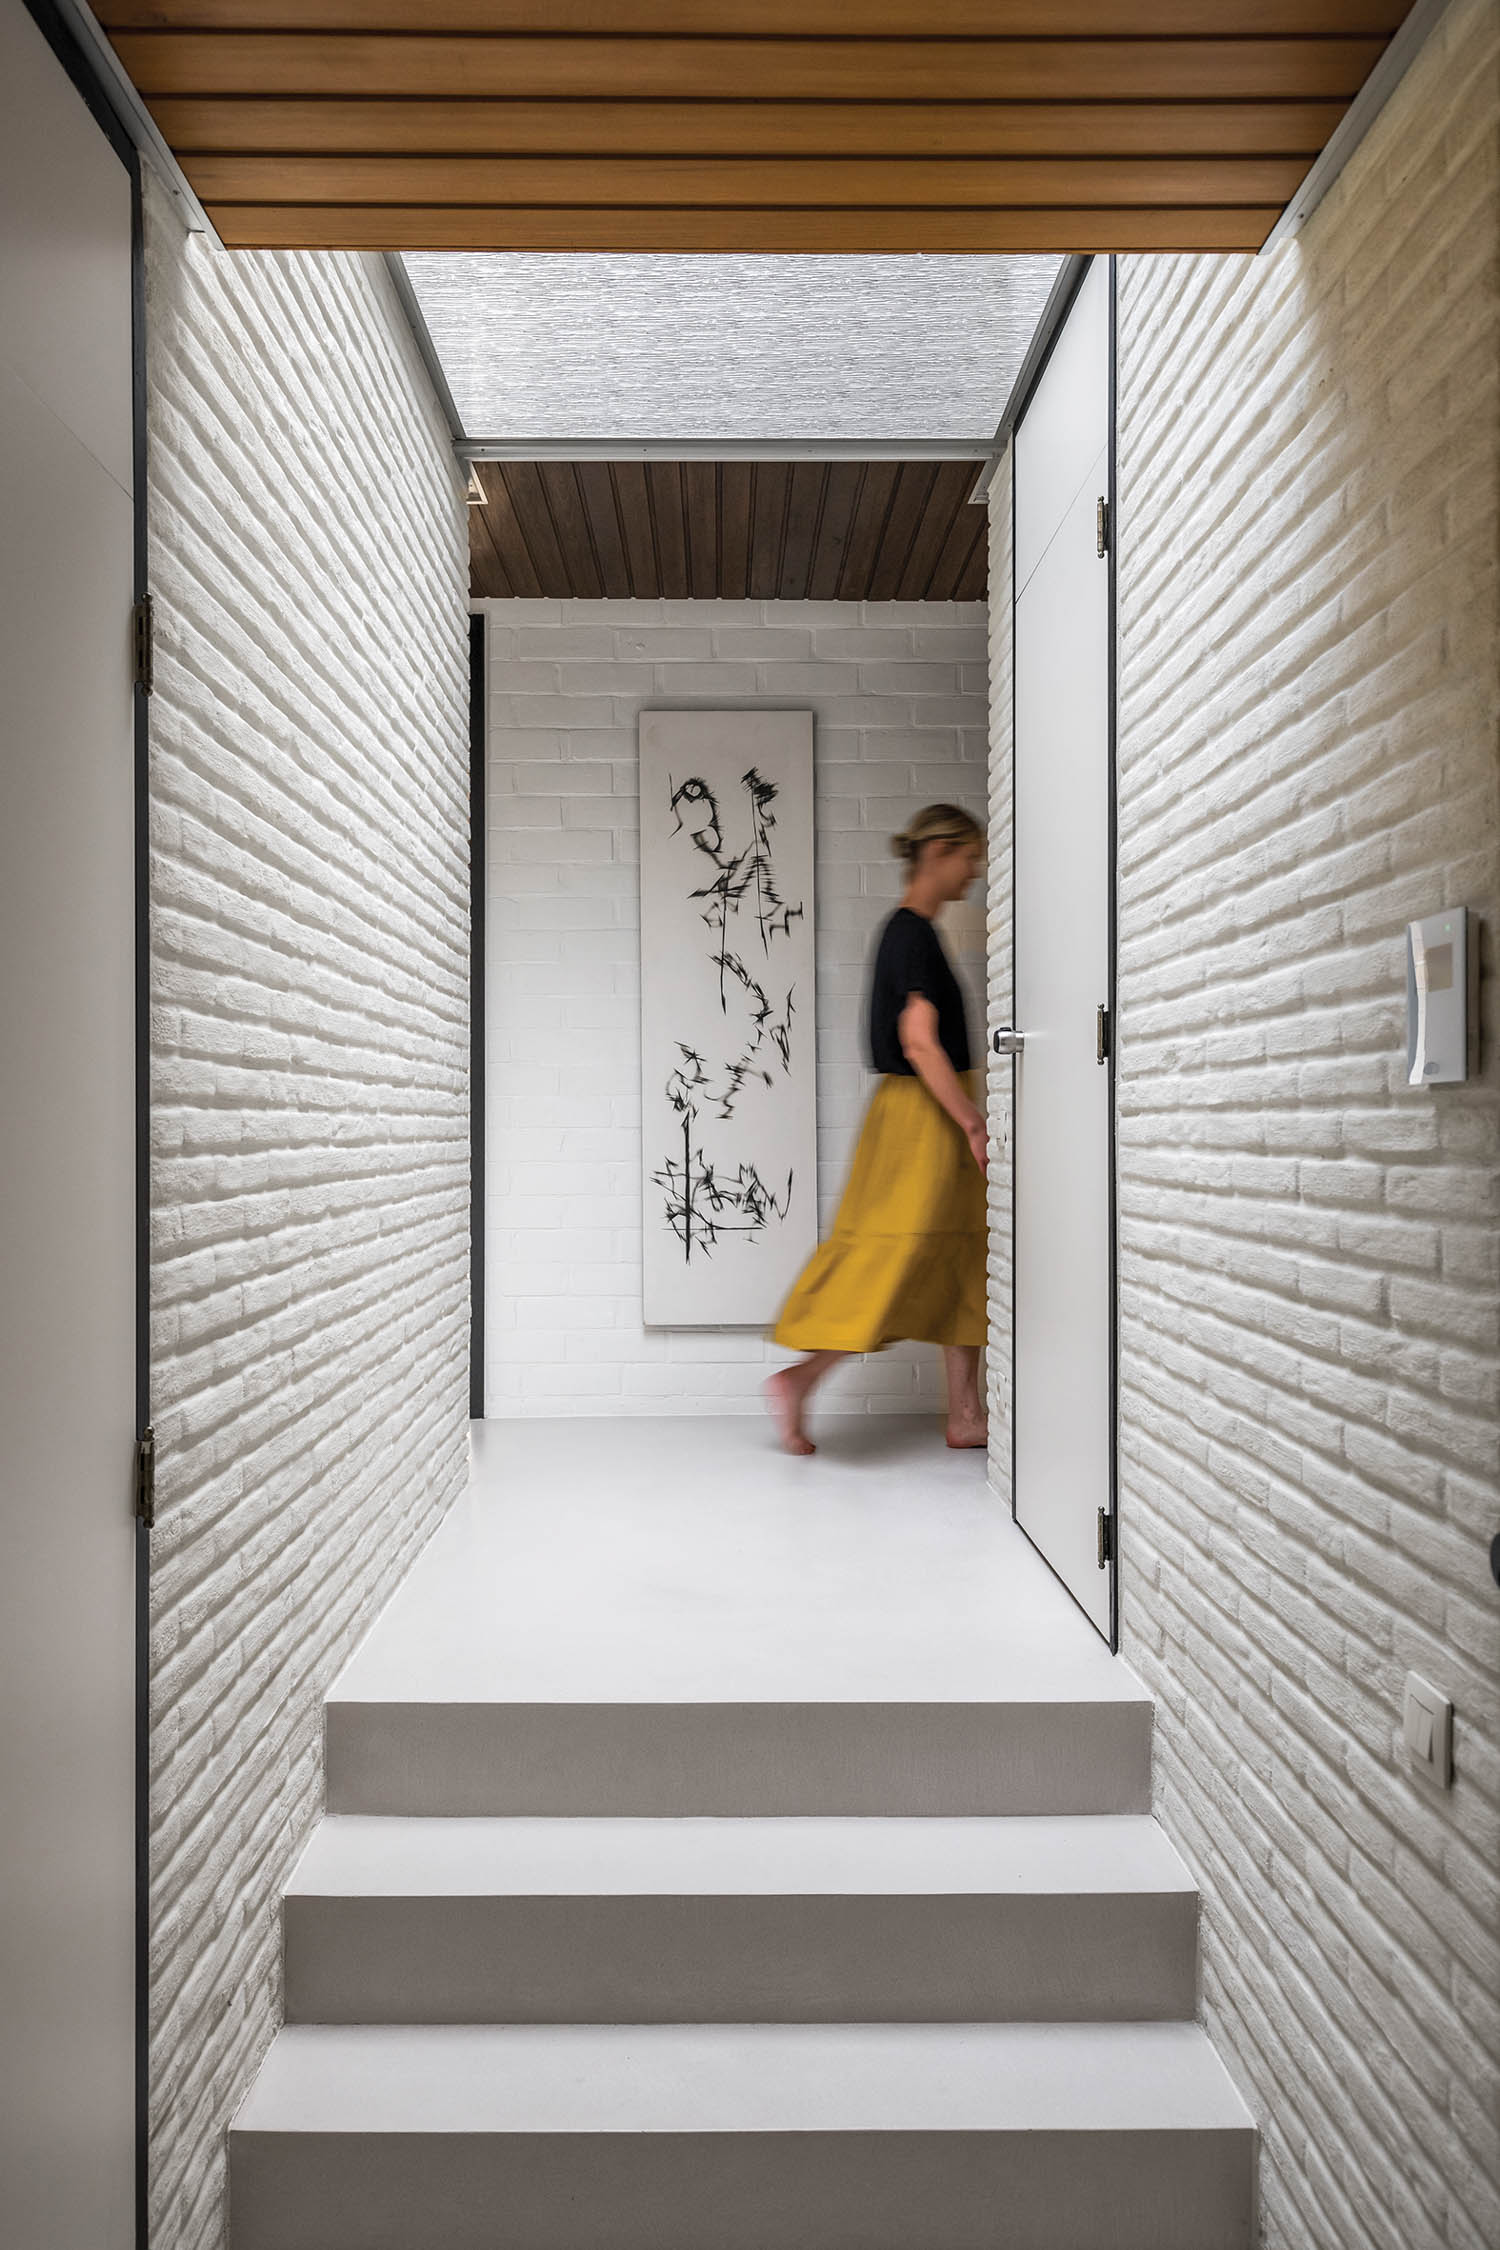 a woman walks through the hallway with whitewashed bricks